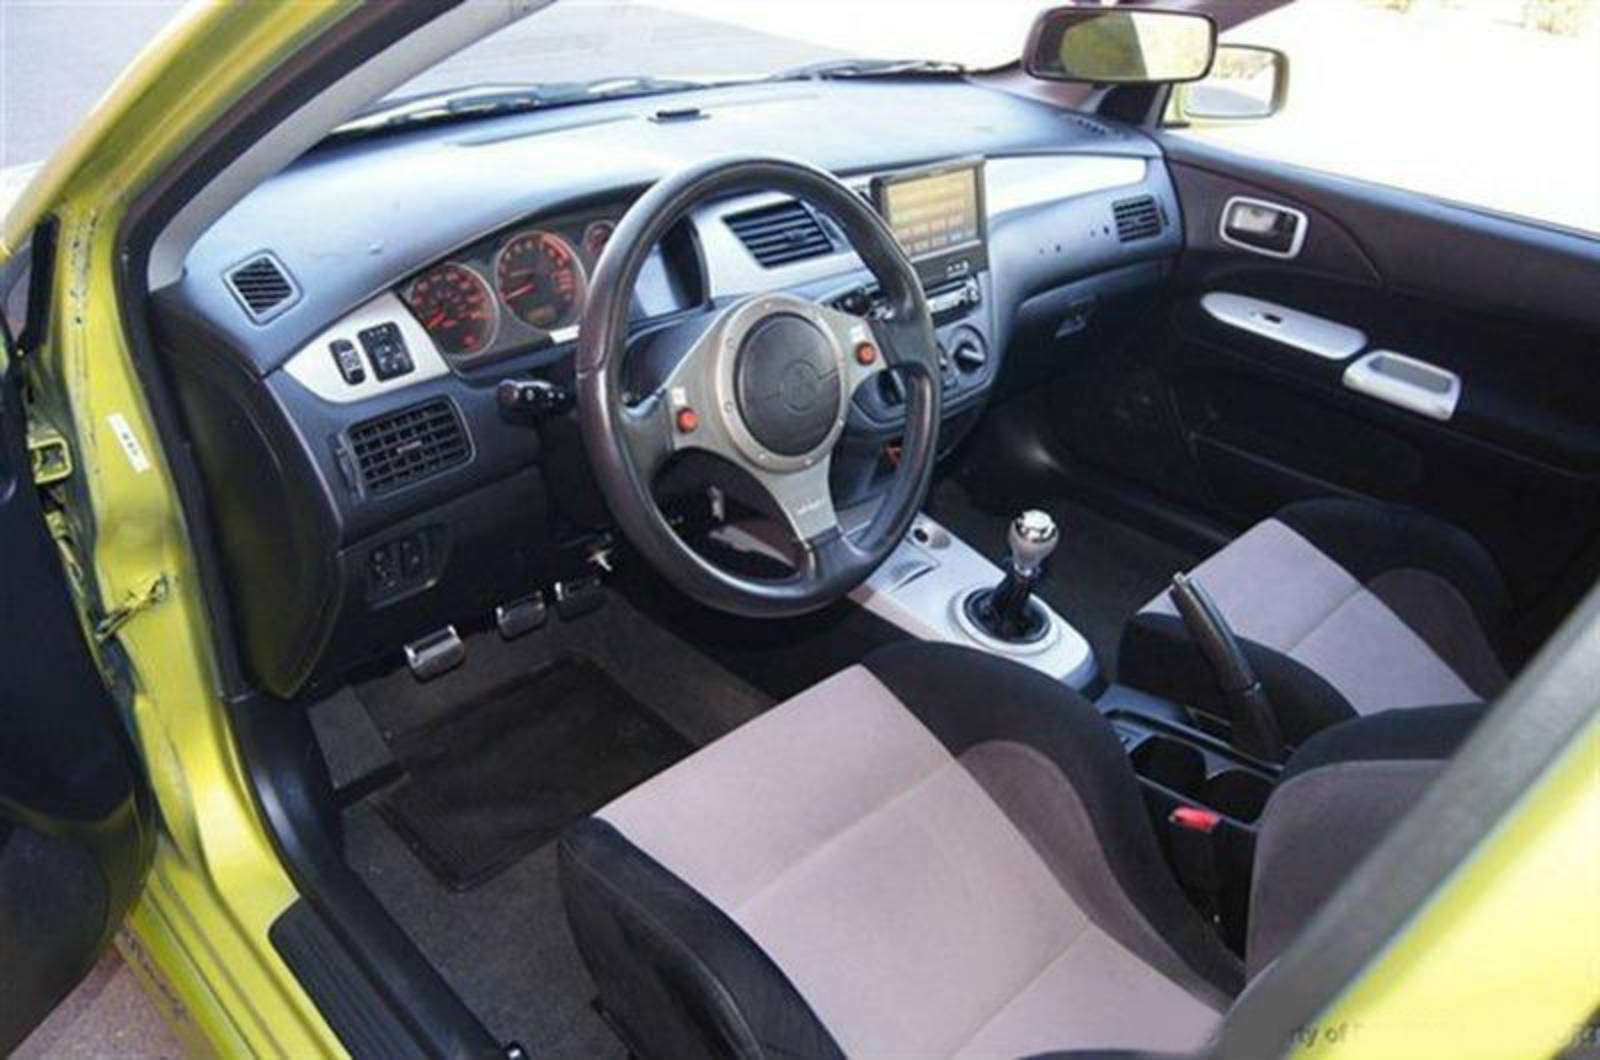 2 Fast 2 Furious Paul Walker S Mitsubishi Evo For Sale On